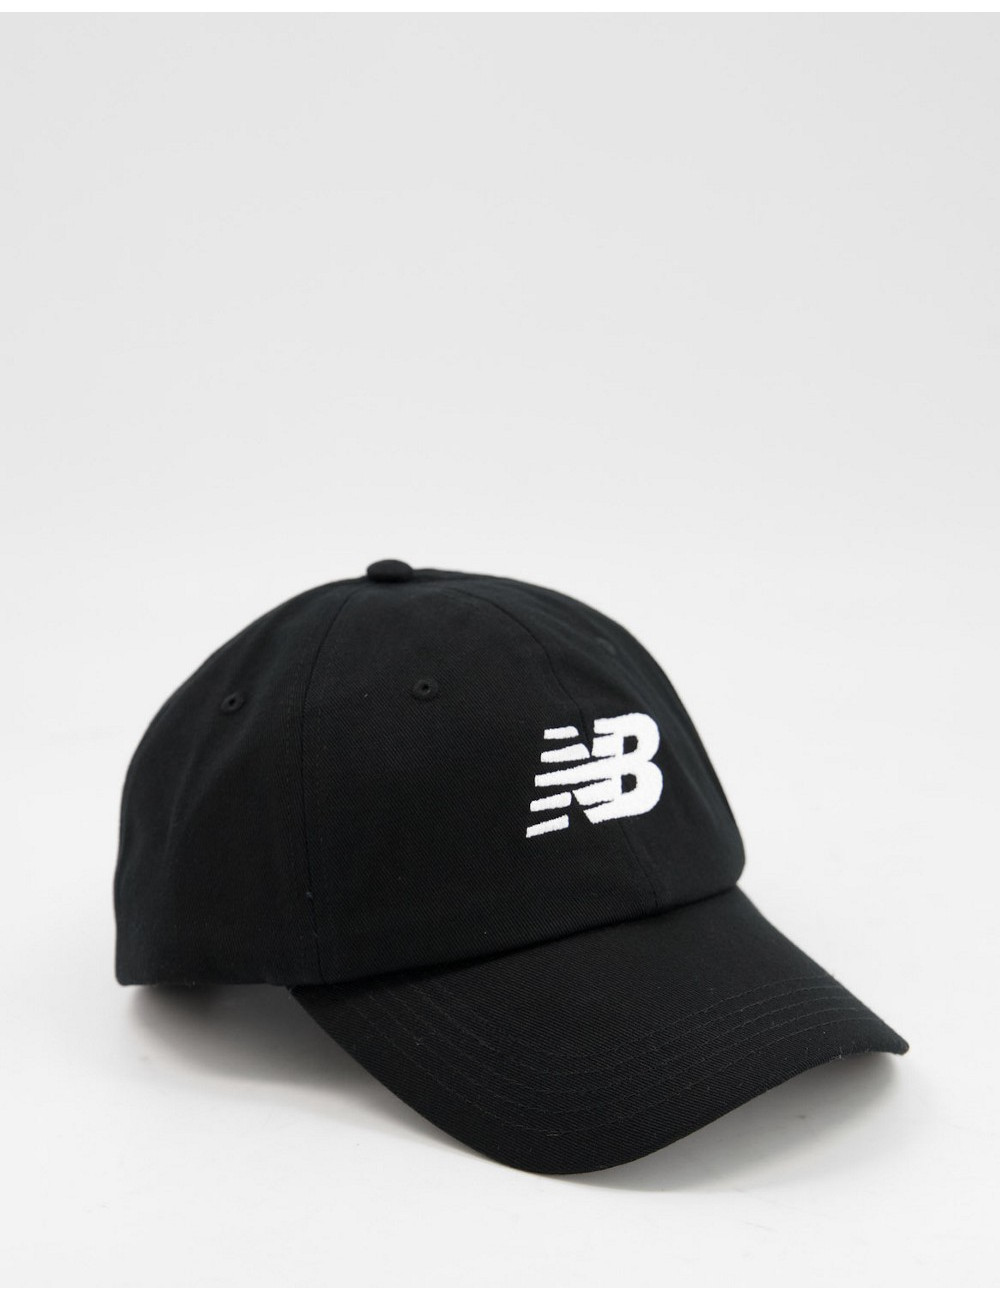 New Balance logo cap in black